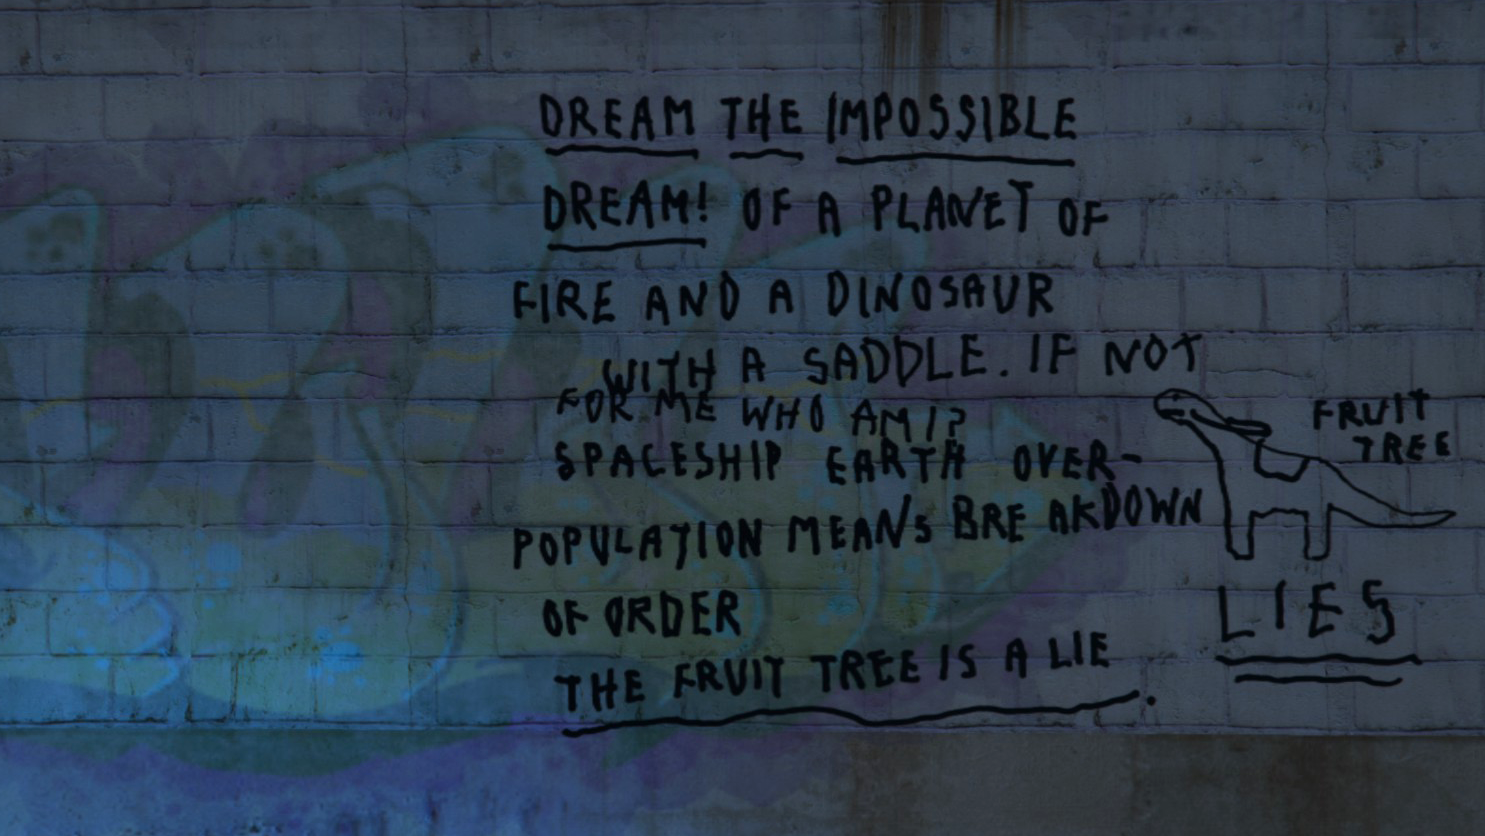 Grand Theft Auto V: Special Edition Map Contains Secret Messages